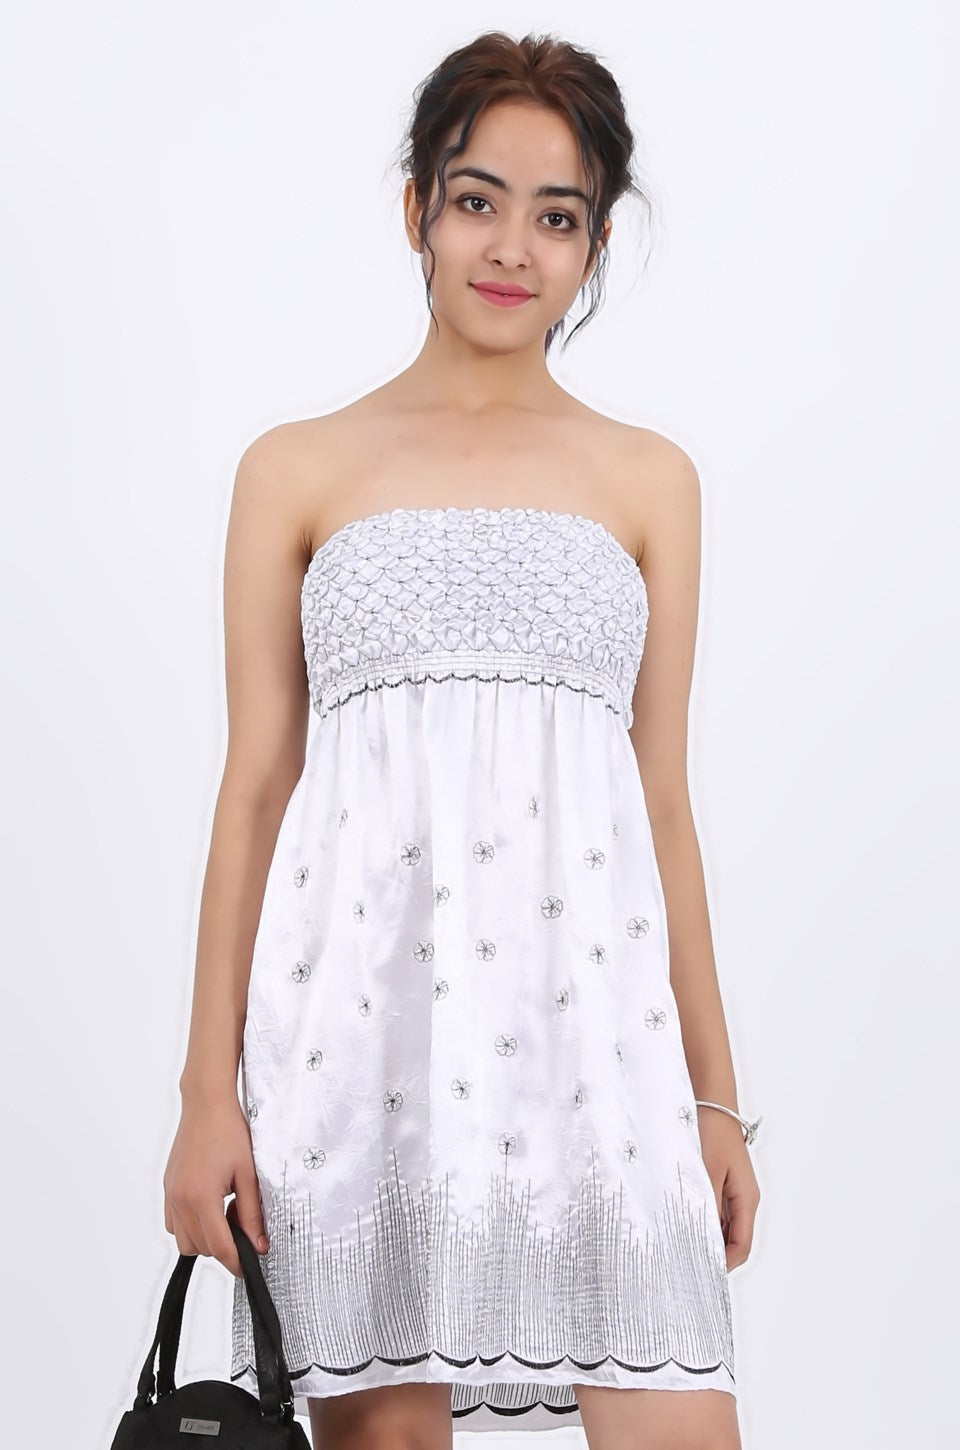 MISS PINKI Maya boobtube embroidery satin dress in white